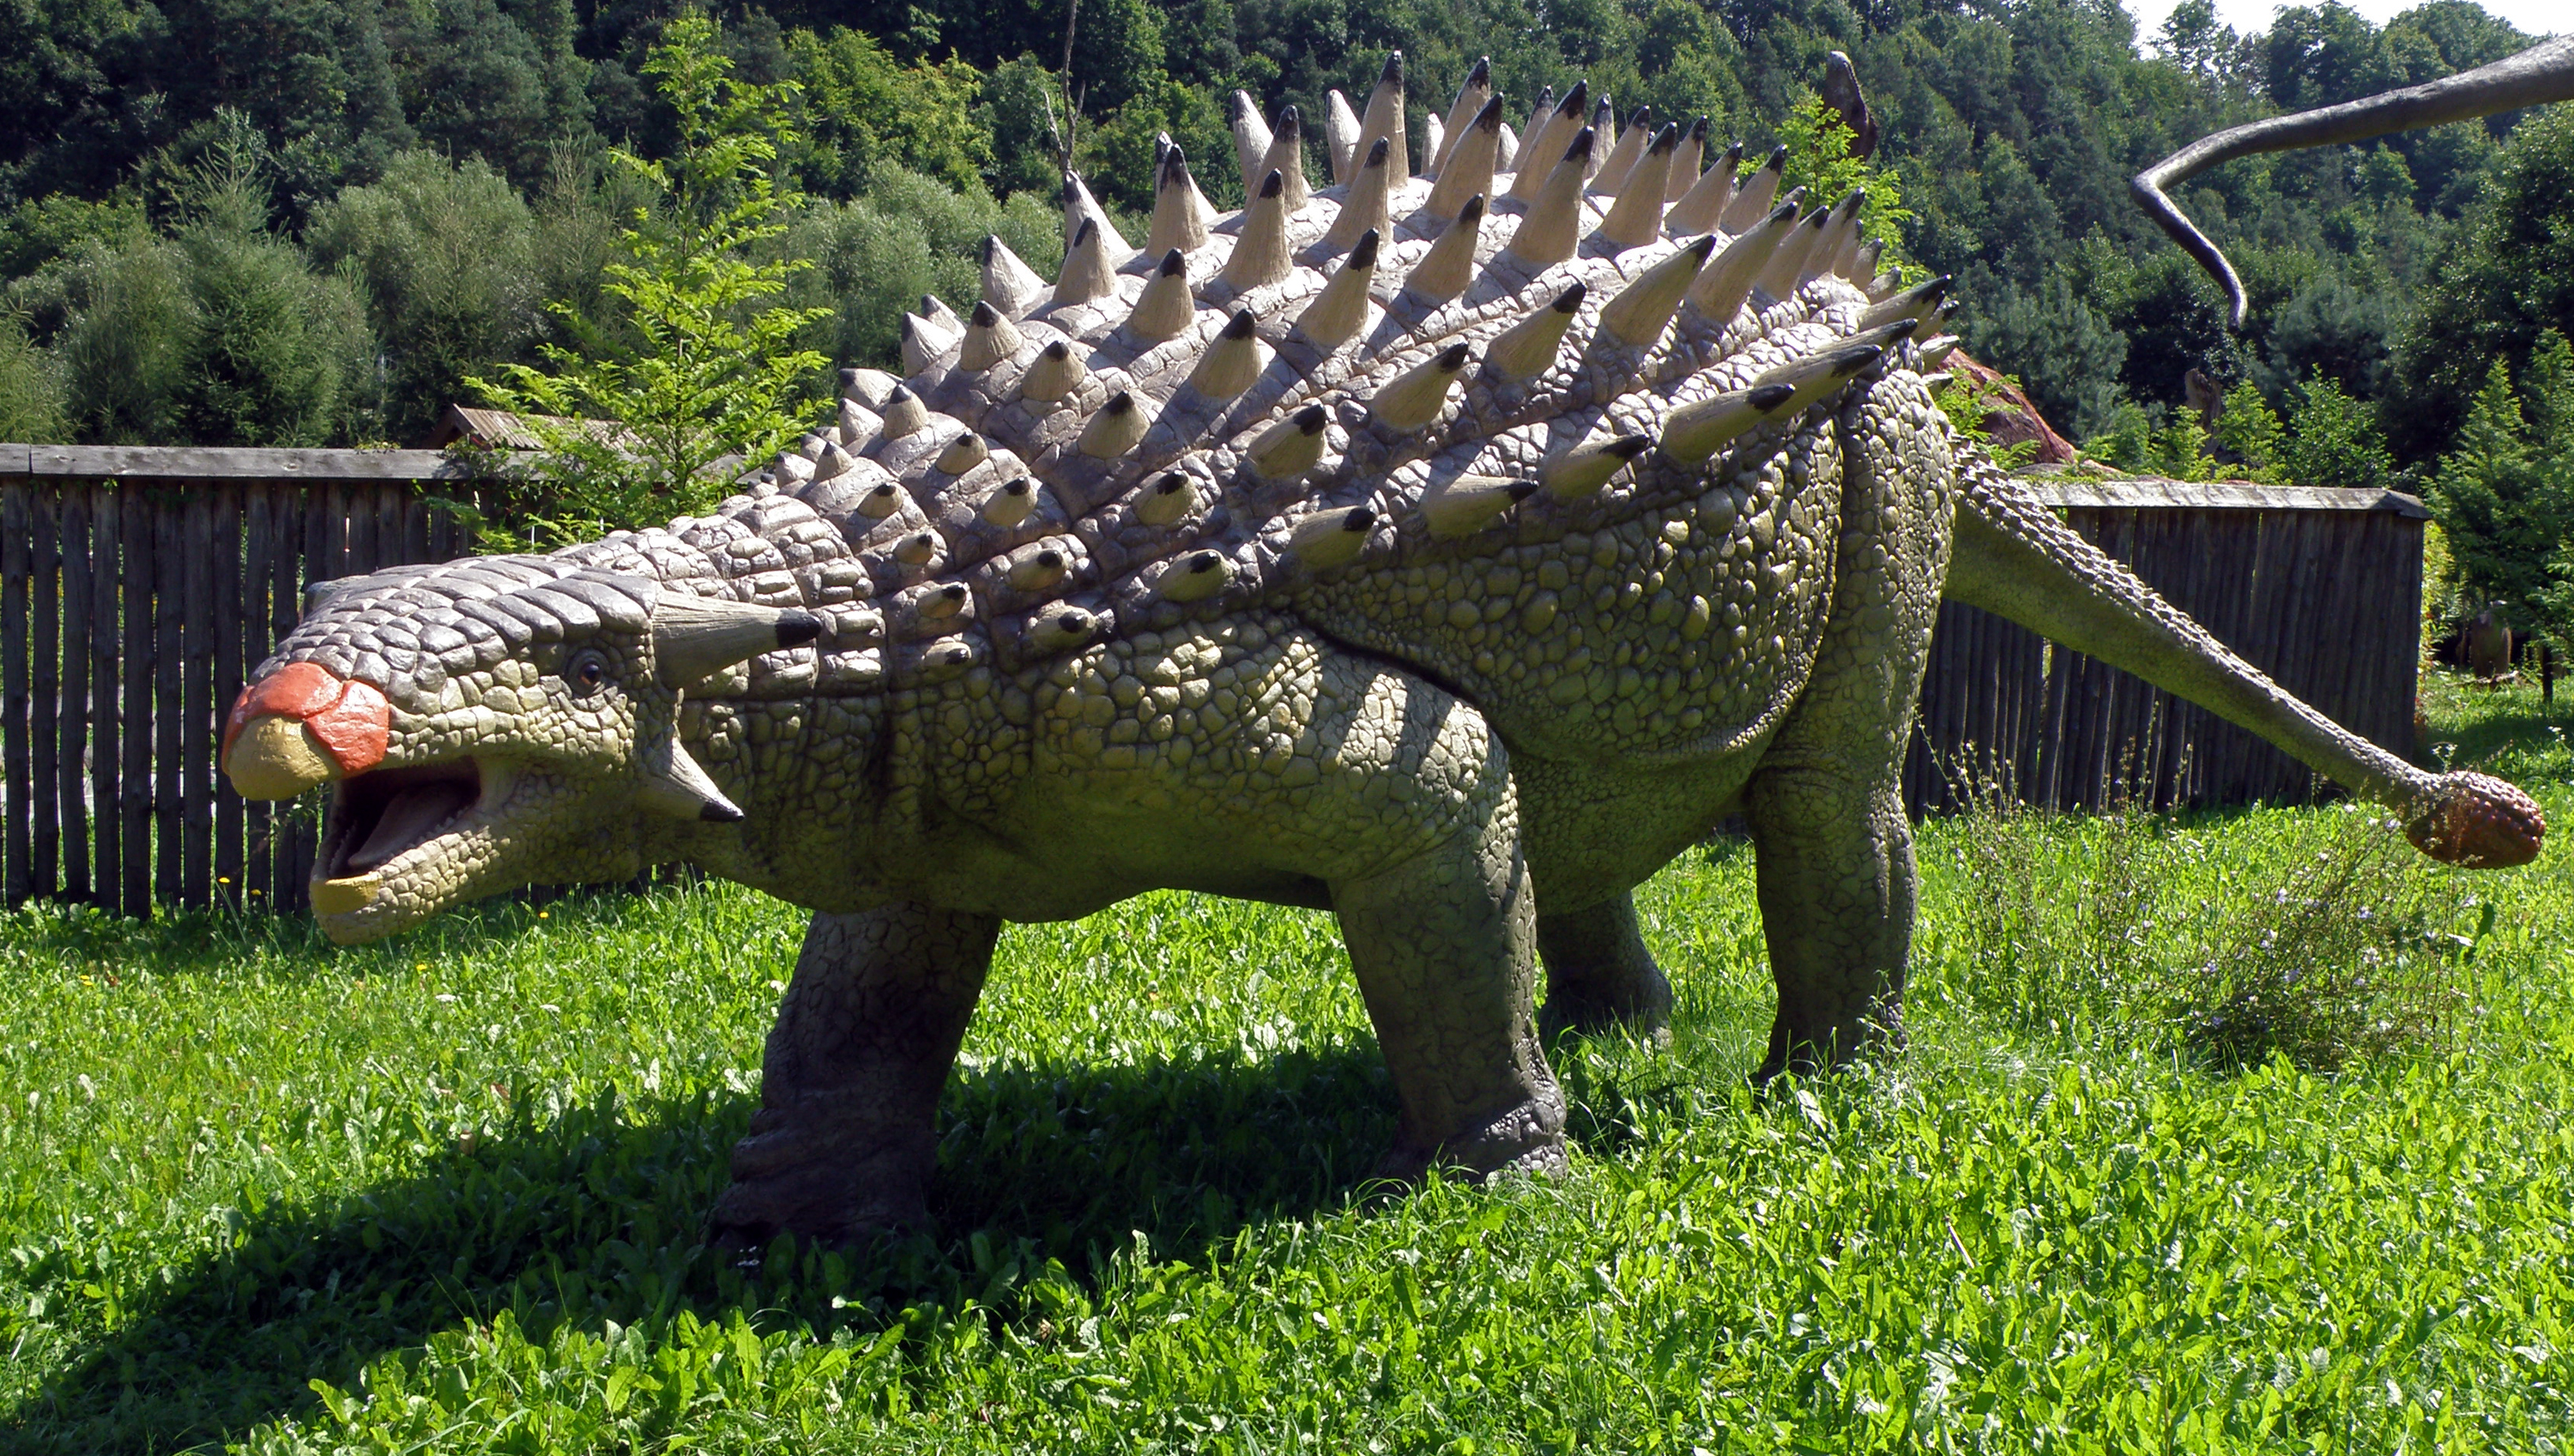 Ankylozaur_(Ankylosaurus)_-_JuraPark_Baltow_(1).JPG